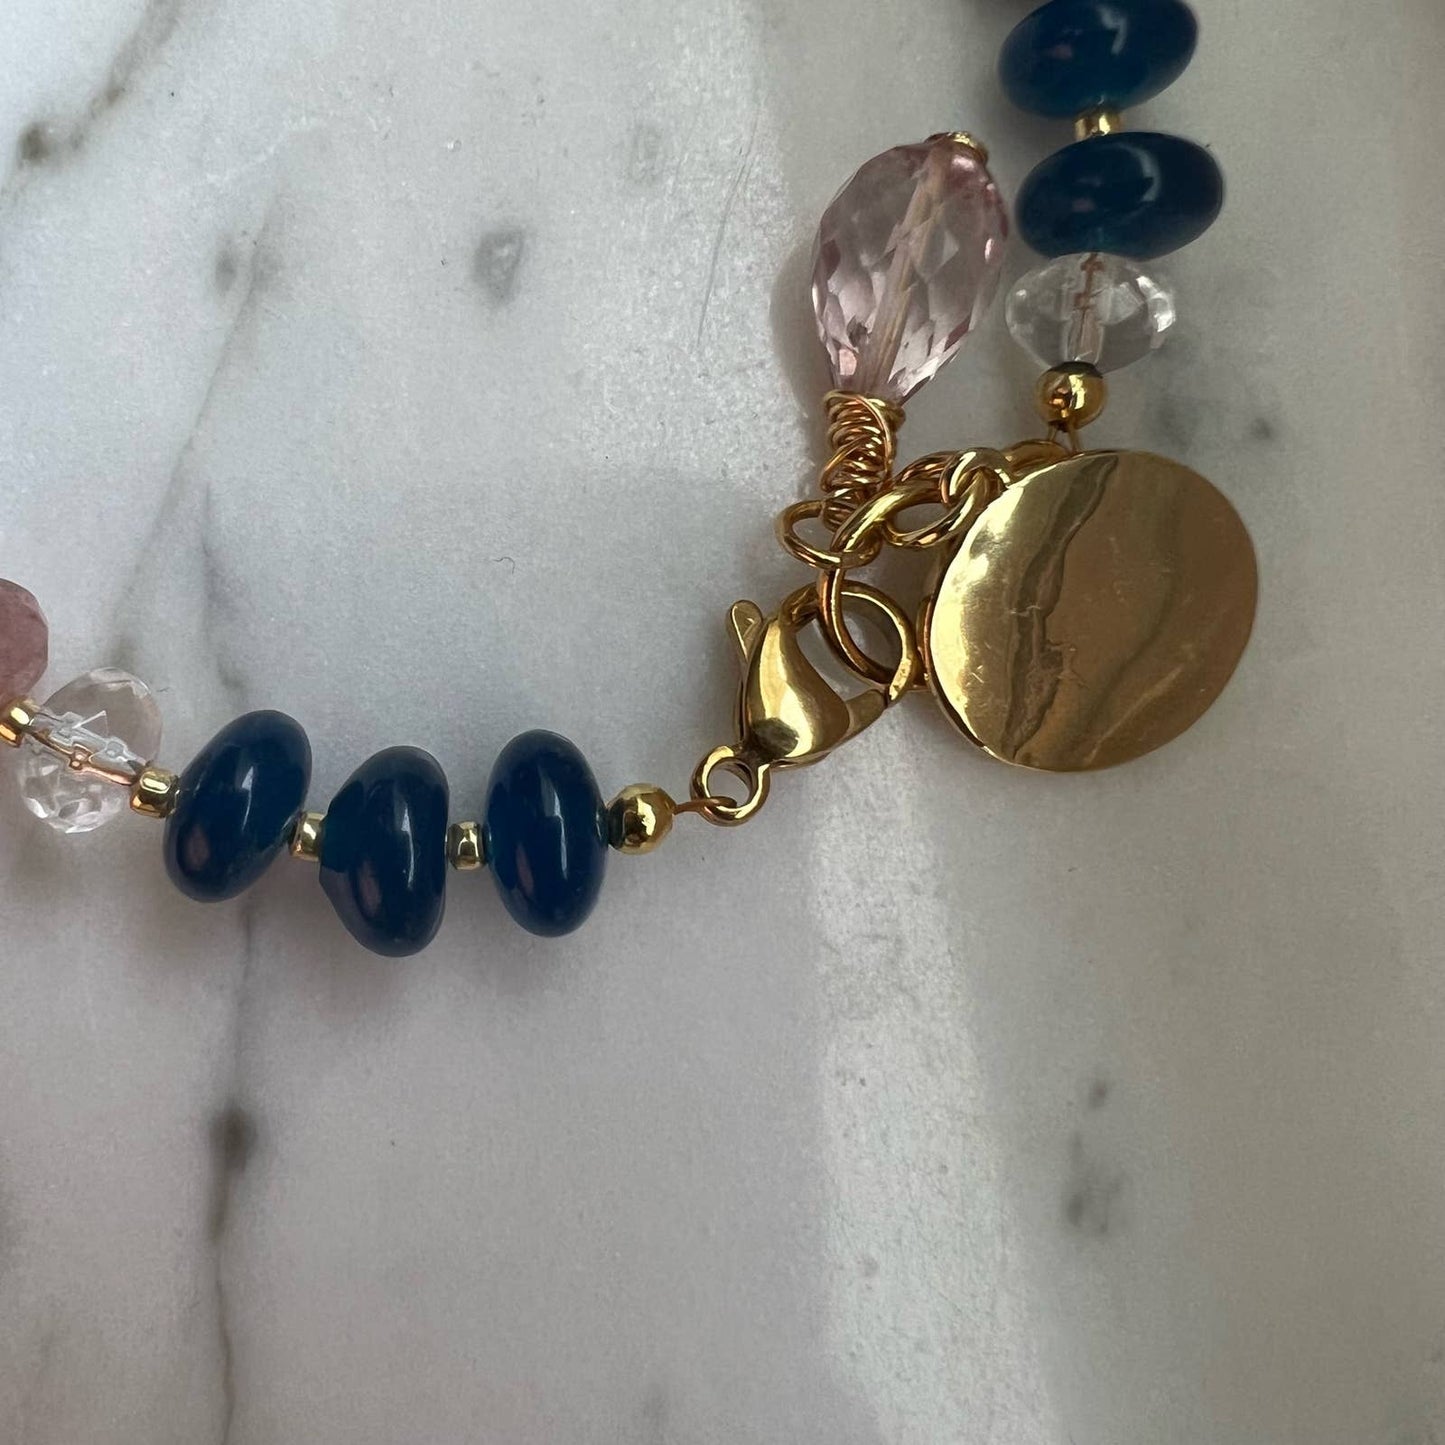 Handcrafted Gemstone Bracelet with Agate, Aquamarine and Rose Quartz